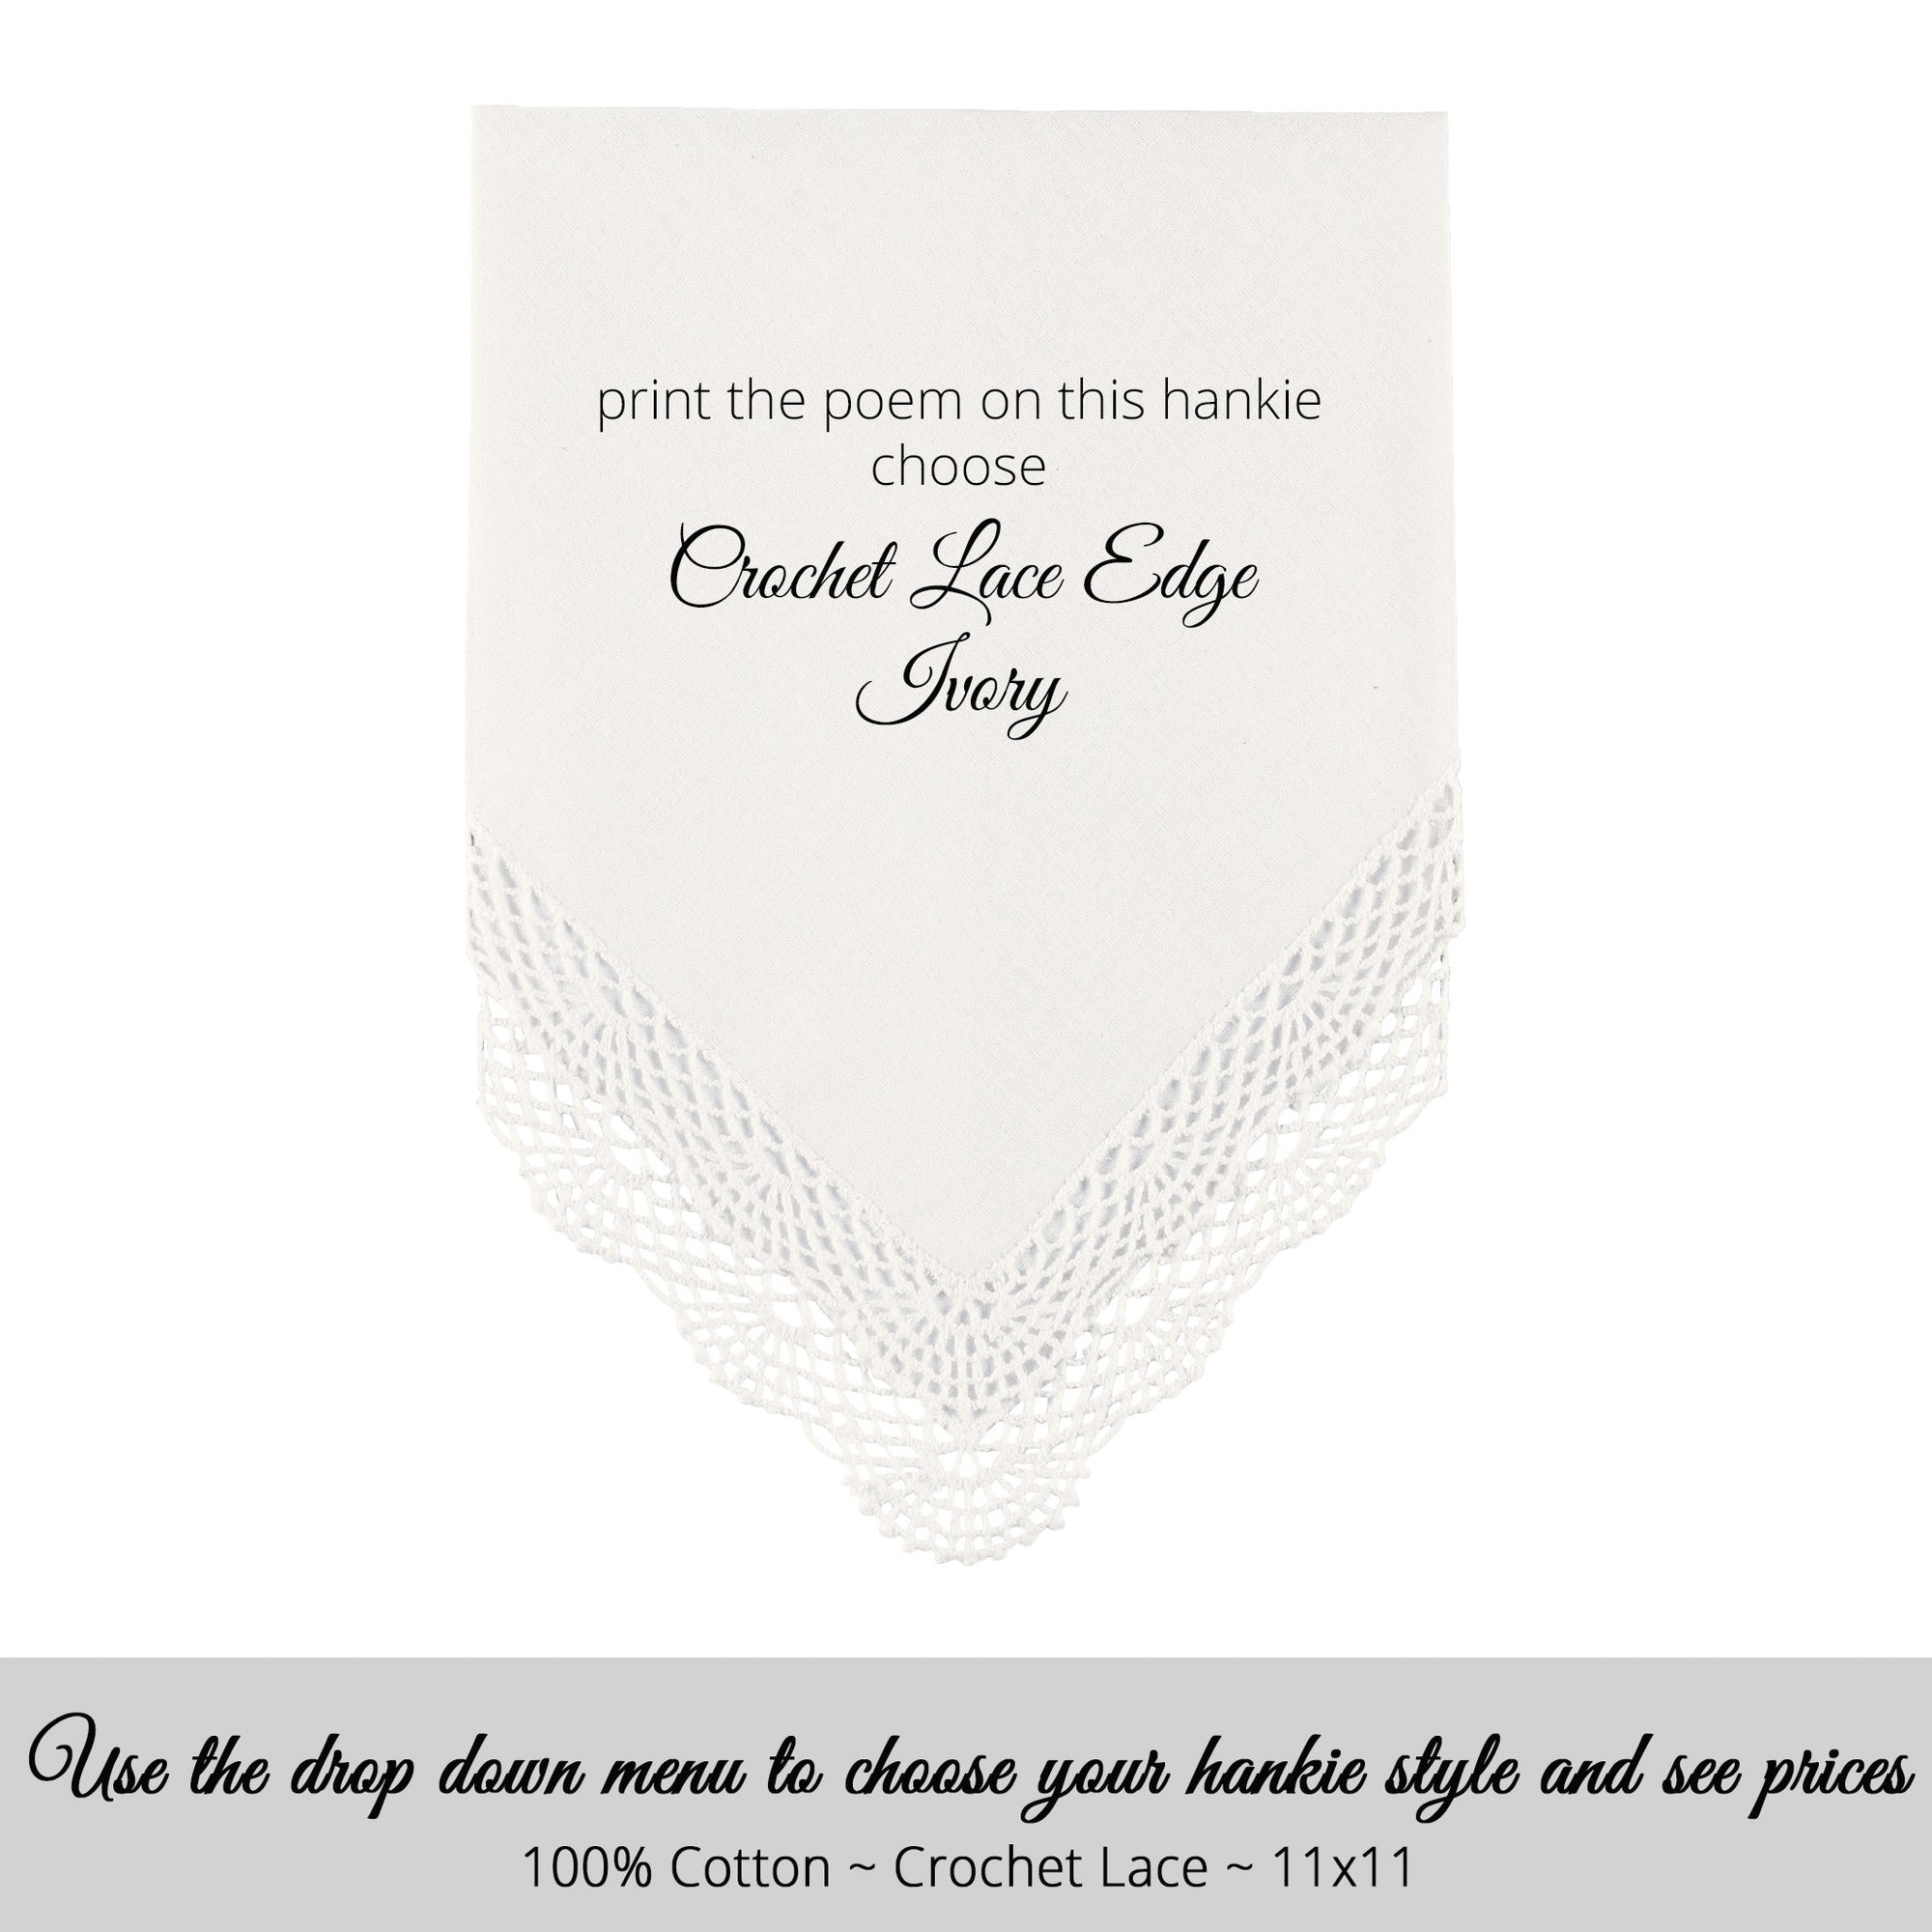 Wedding handkerchief ivory with crochet lace edge  poem printed wedding hankie